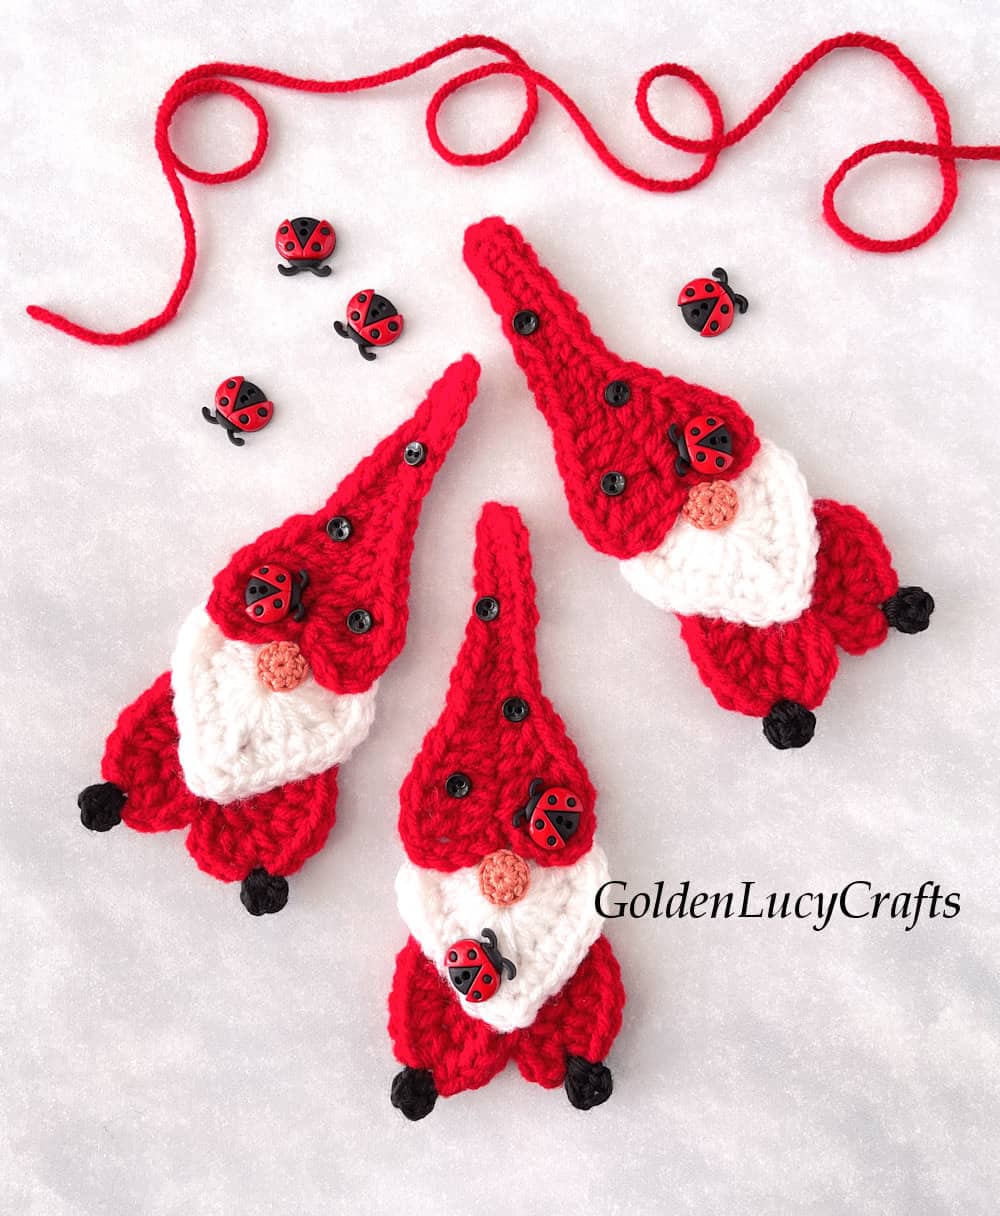 Three crochet ladybug-themed gnomes.